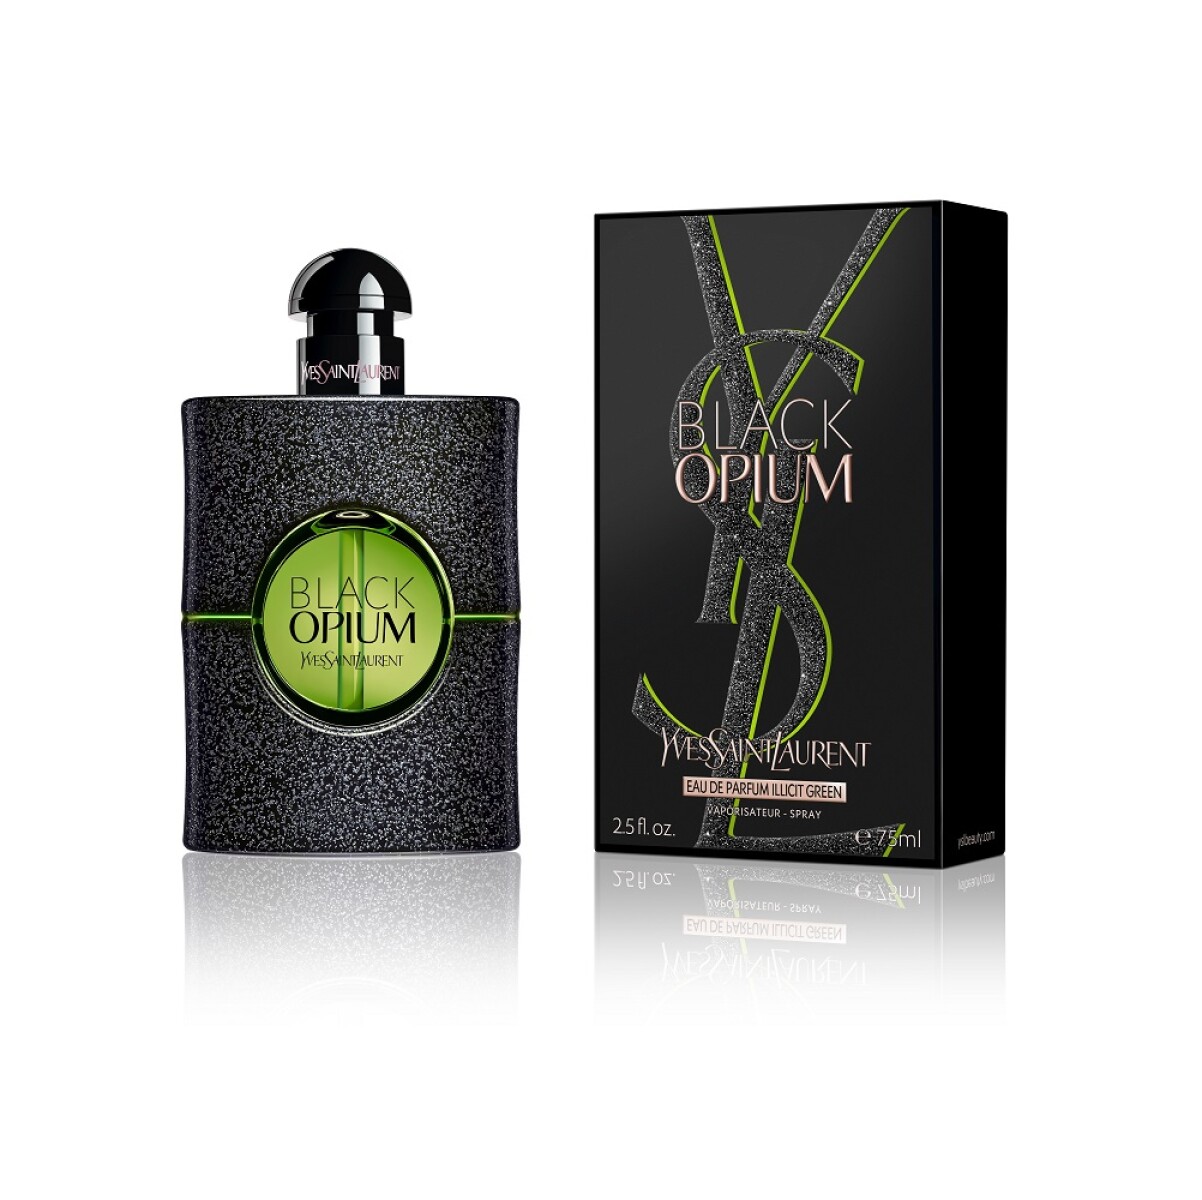 Perfume Yves Saint Laurent Black Opium Edp Illicit Green 75ml 